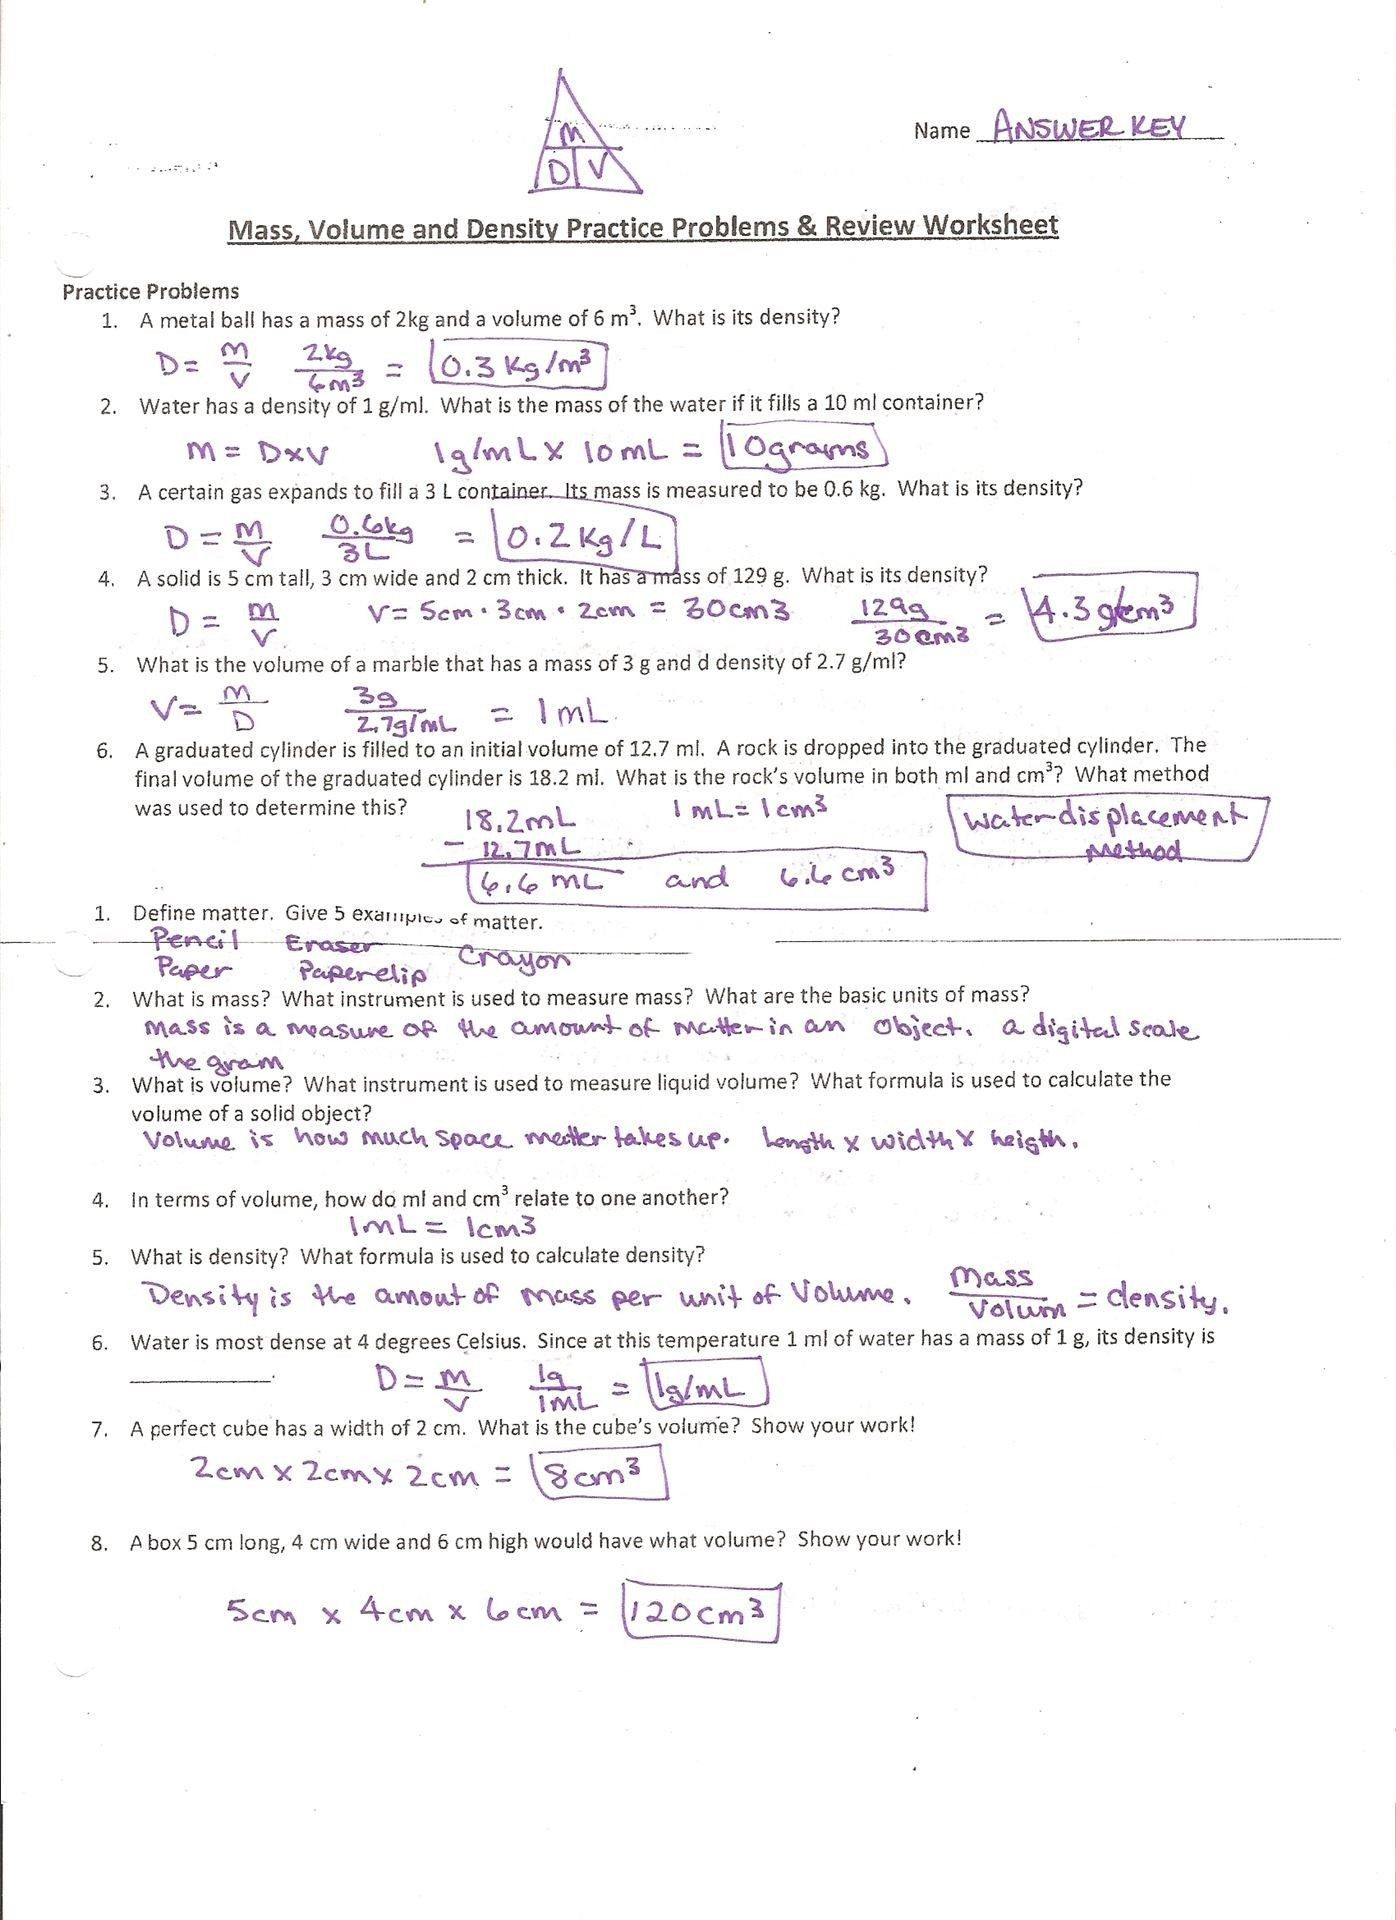 Density Practice Problem Worksheet Mass Volume Density Worksheet Answers Nidecmege